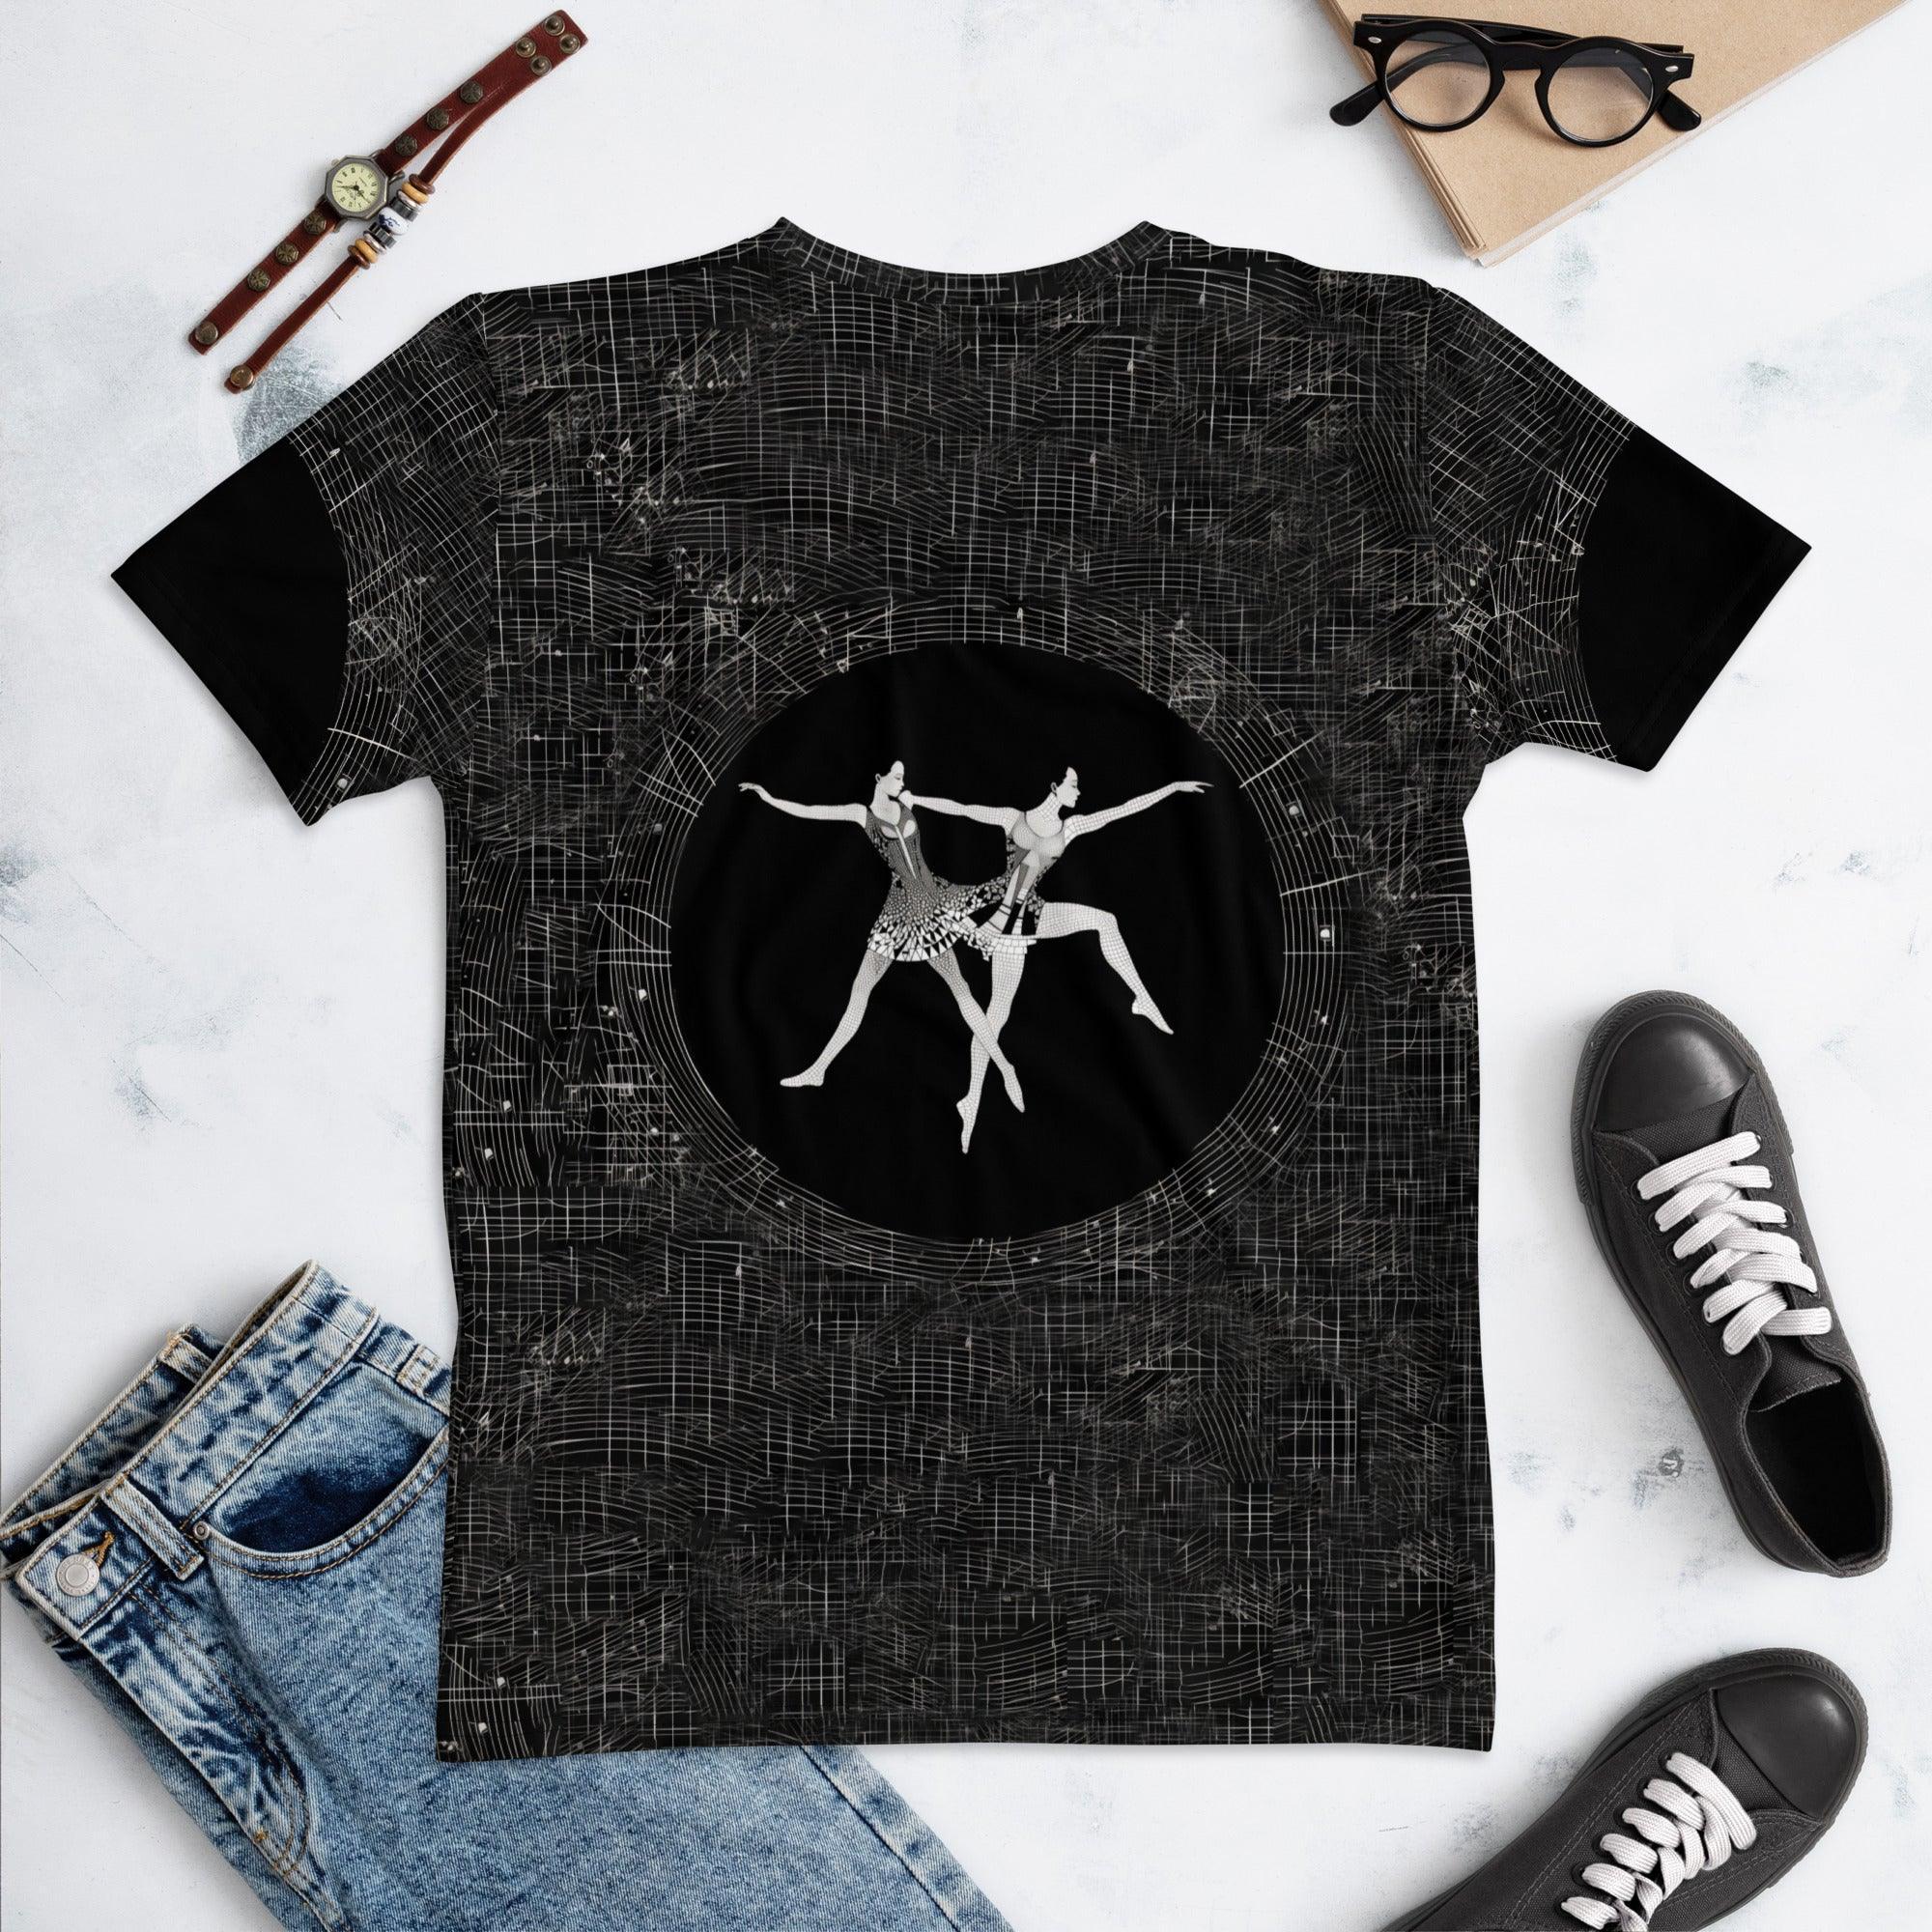 High-quality Women's T-shirt with Aerial Dance Fashion print.